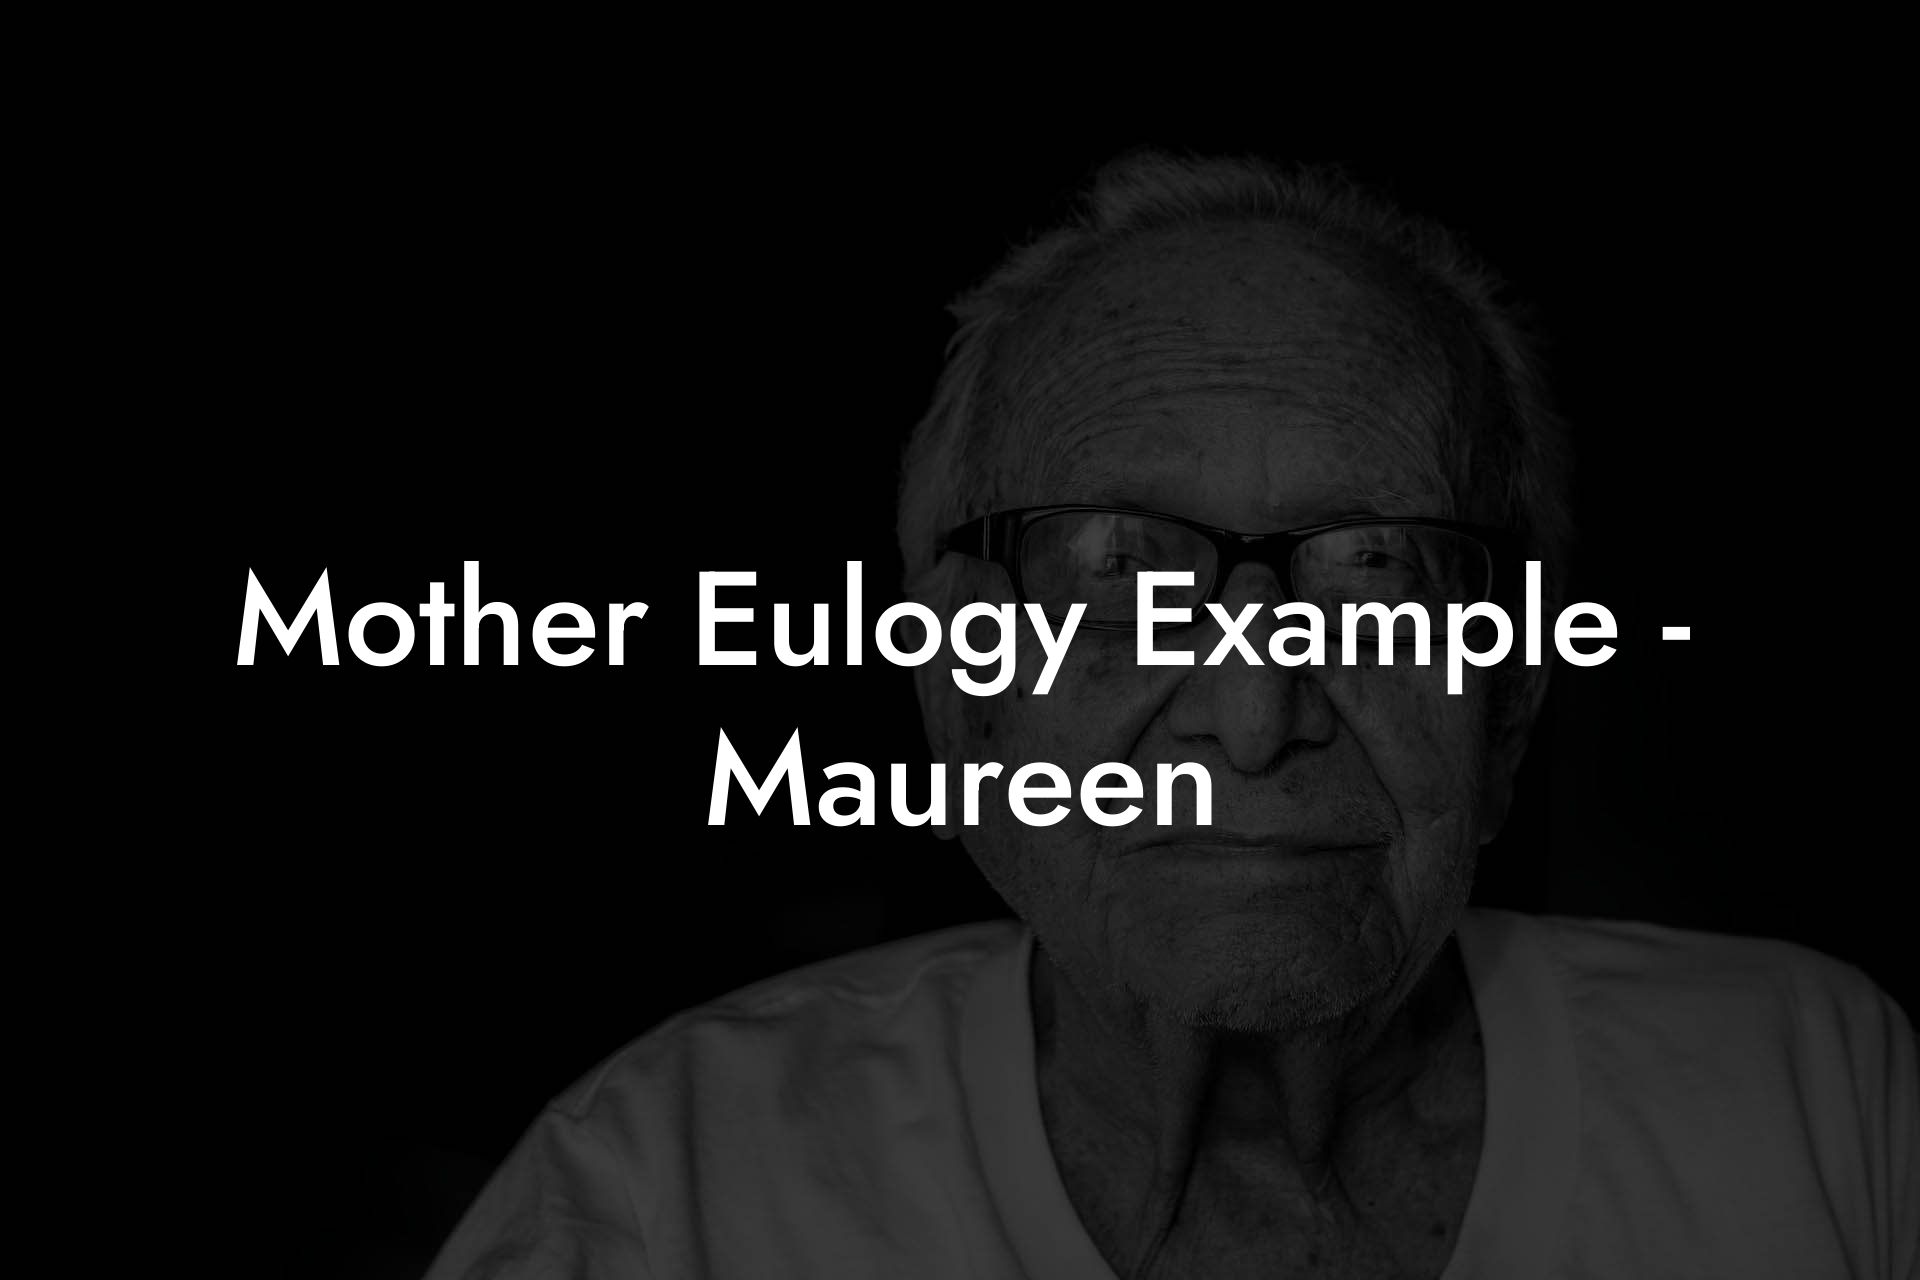 Mother Eulogy Example - Maureen